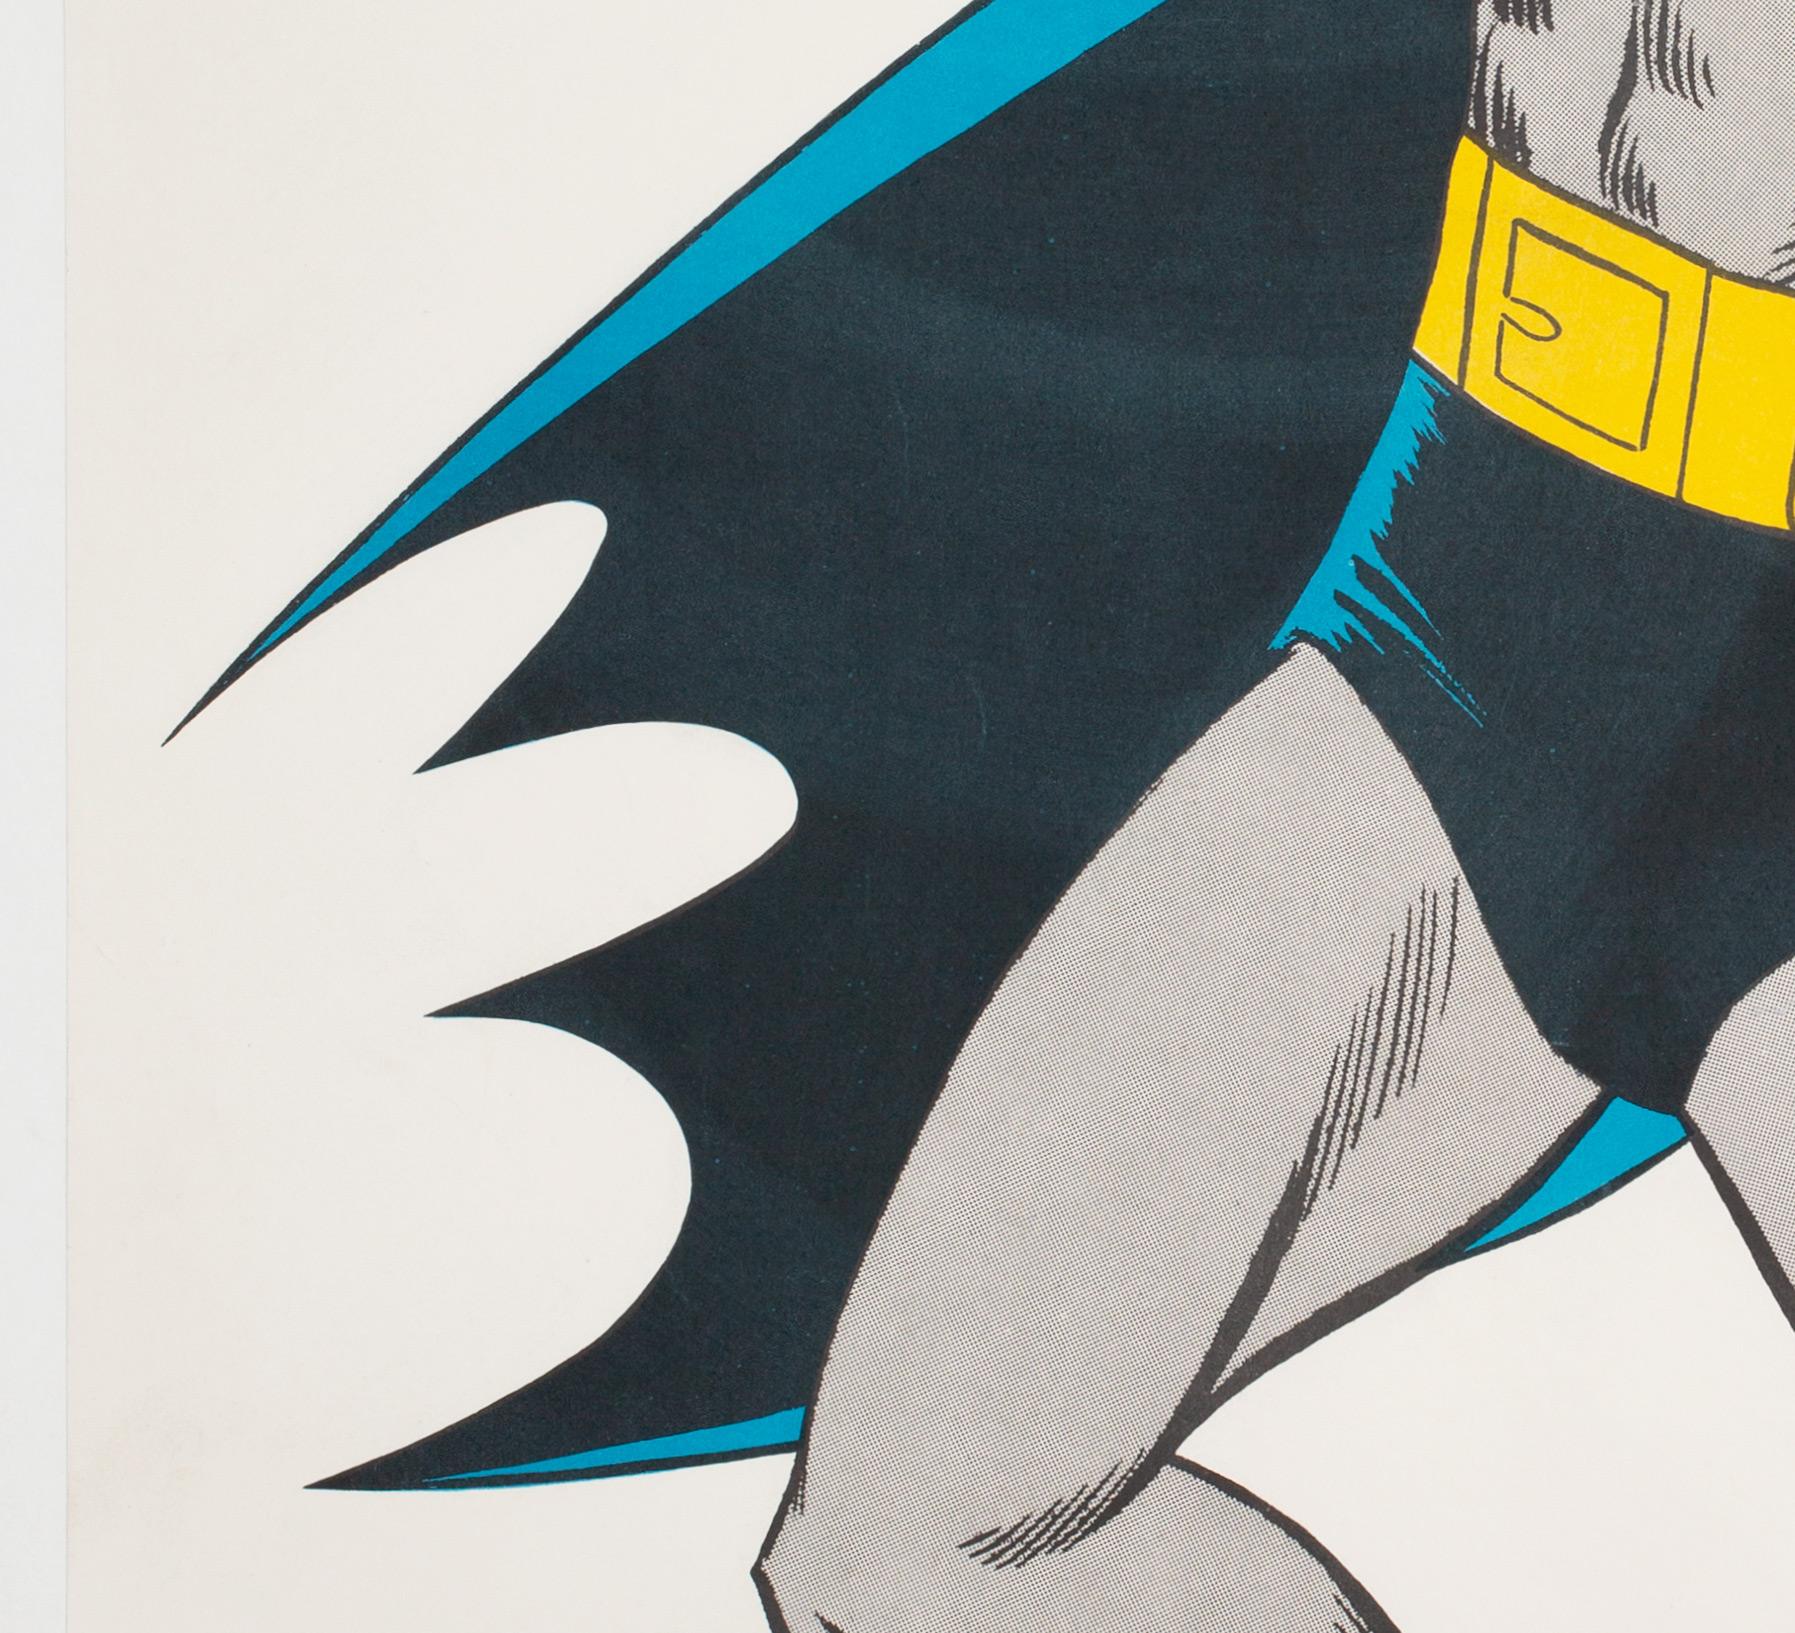 vintage batman poster